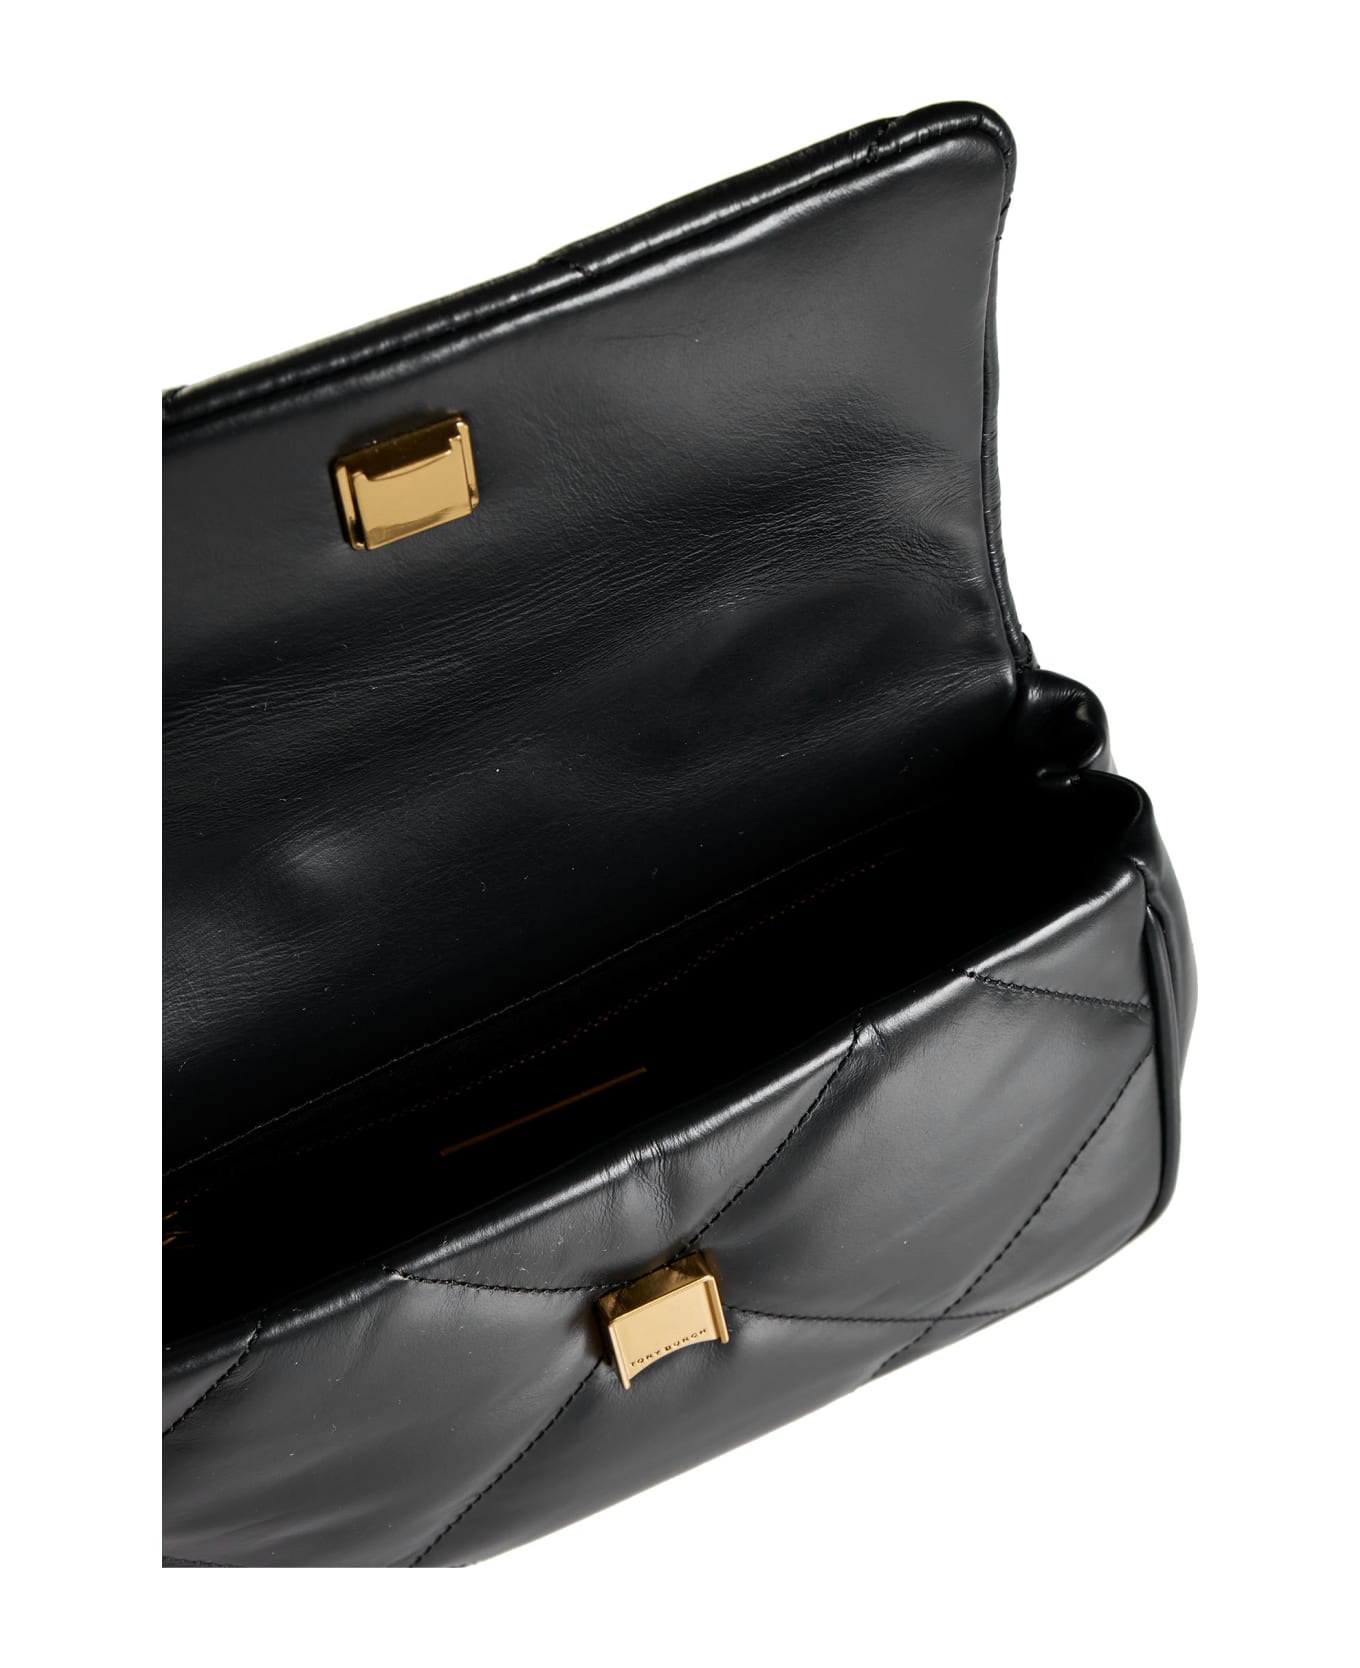 Tory Burch Kira Diamond Quilt Top-handle Bag - Black